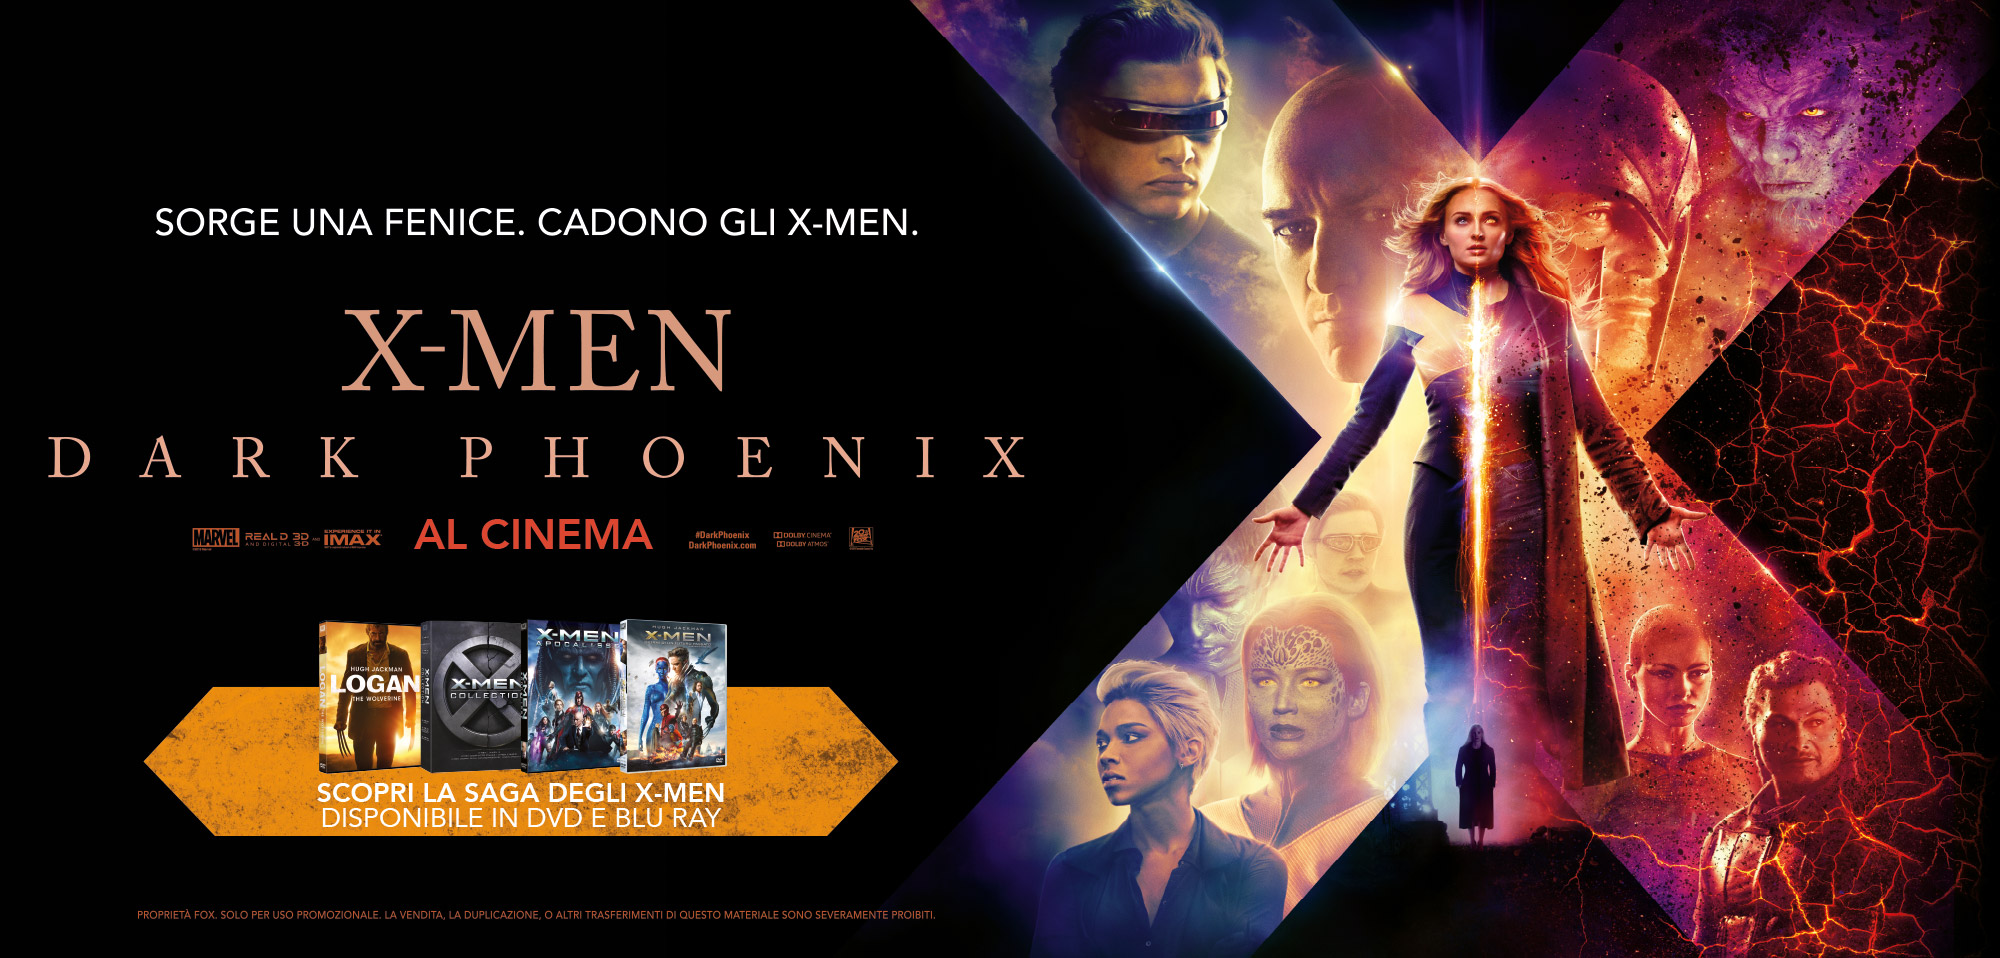 X-MEN: DARK PHOENIX